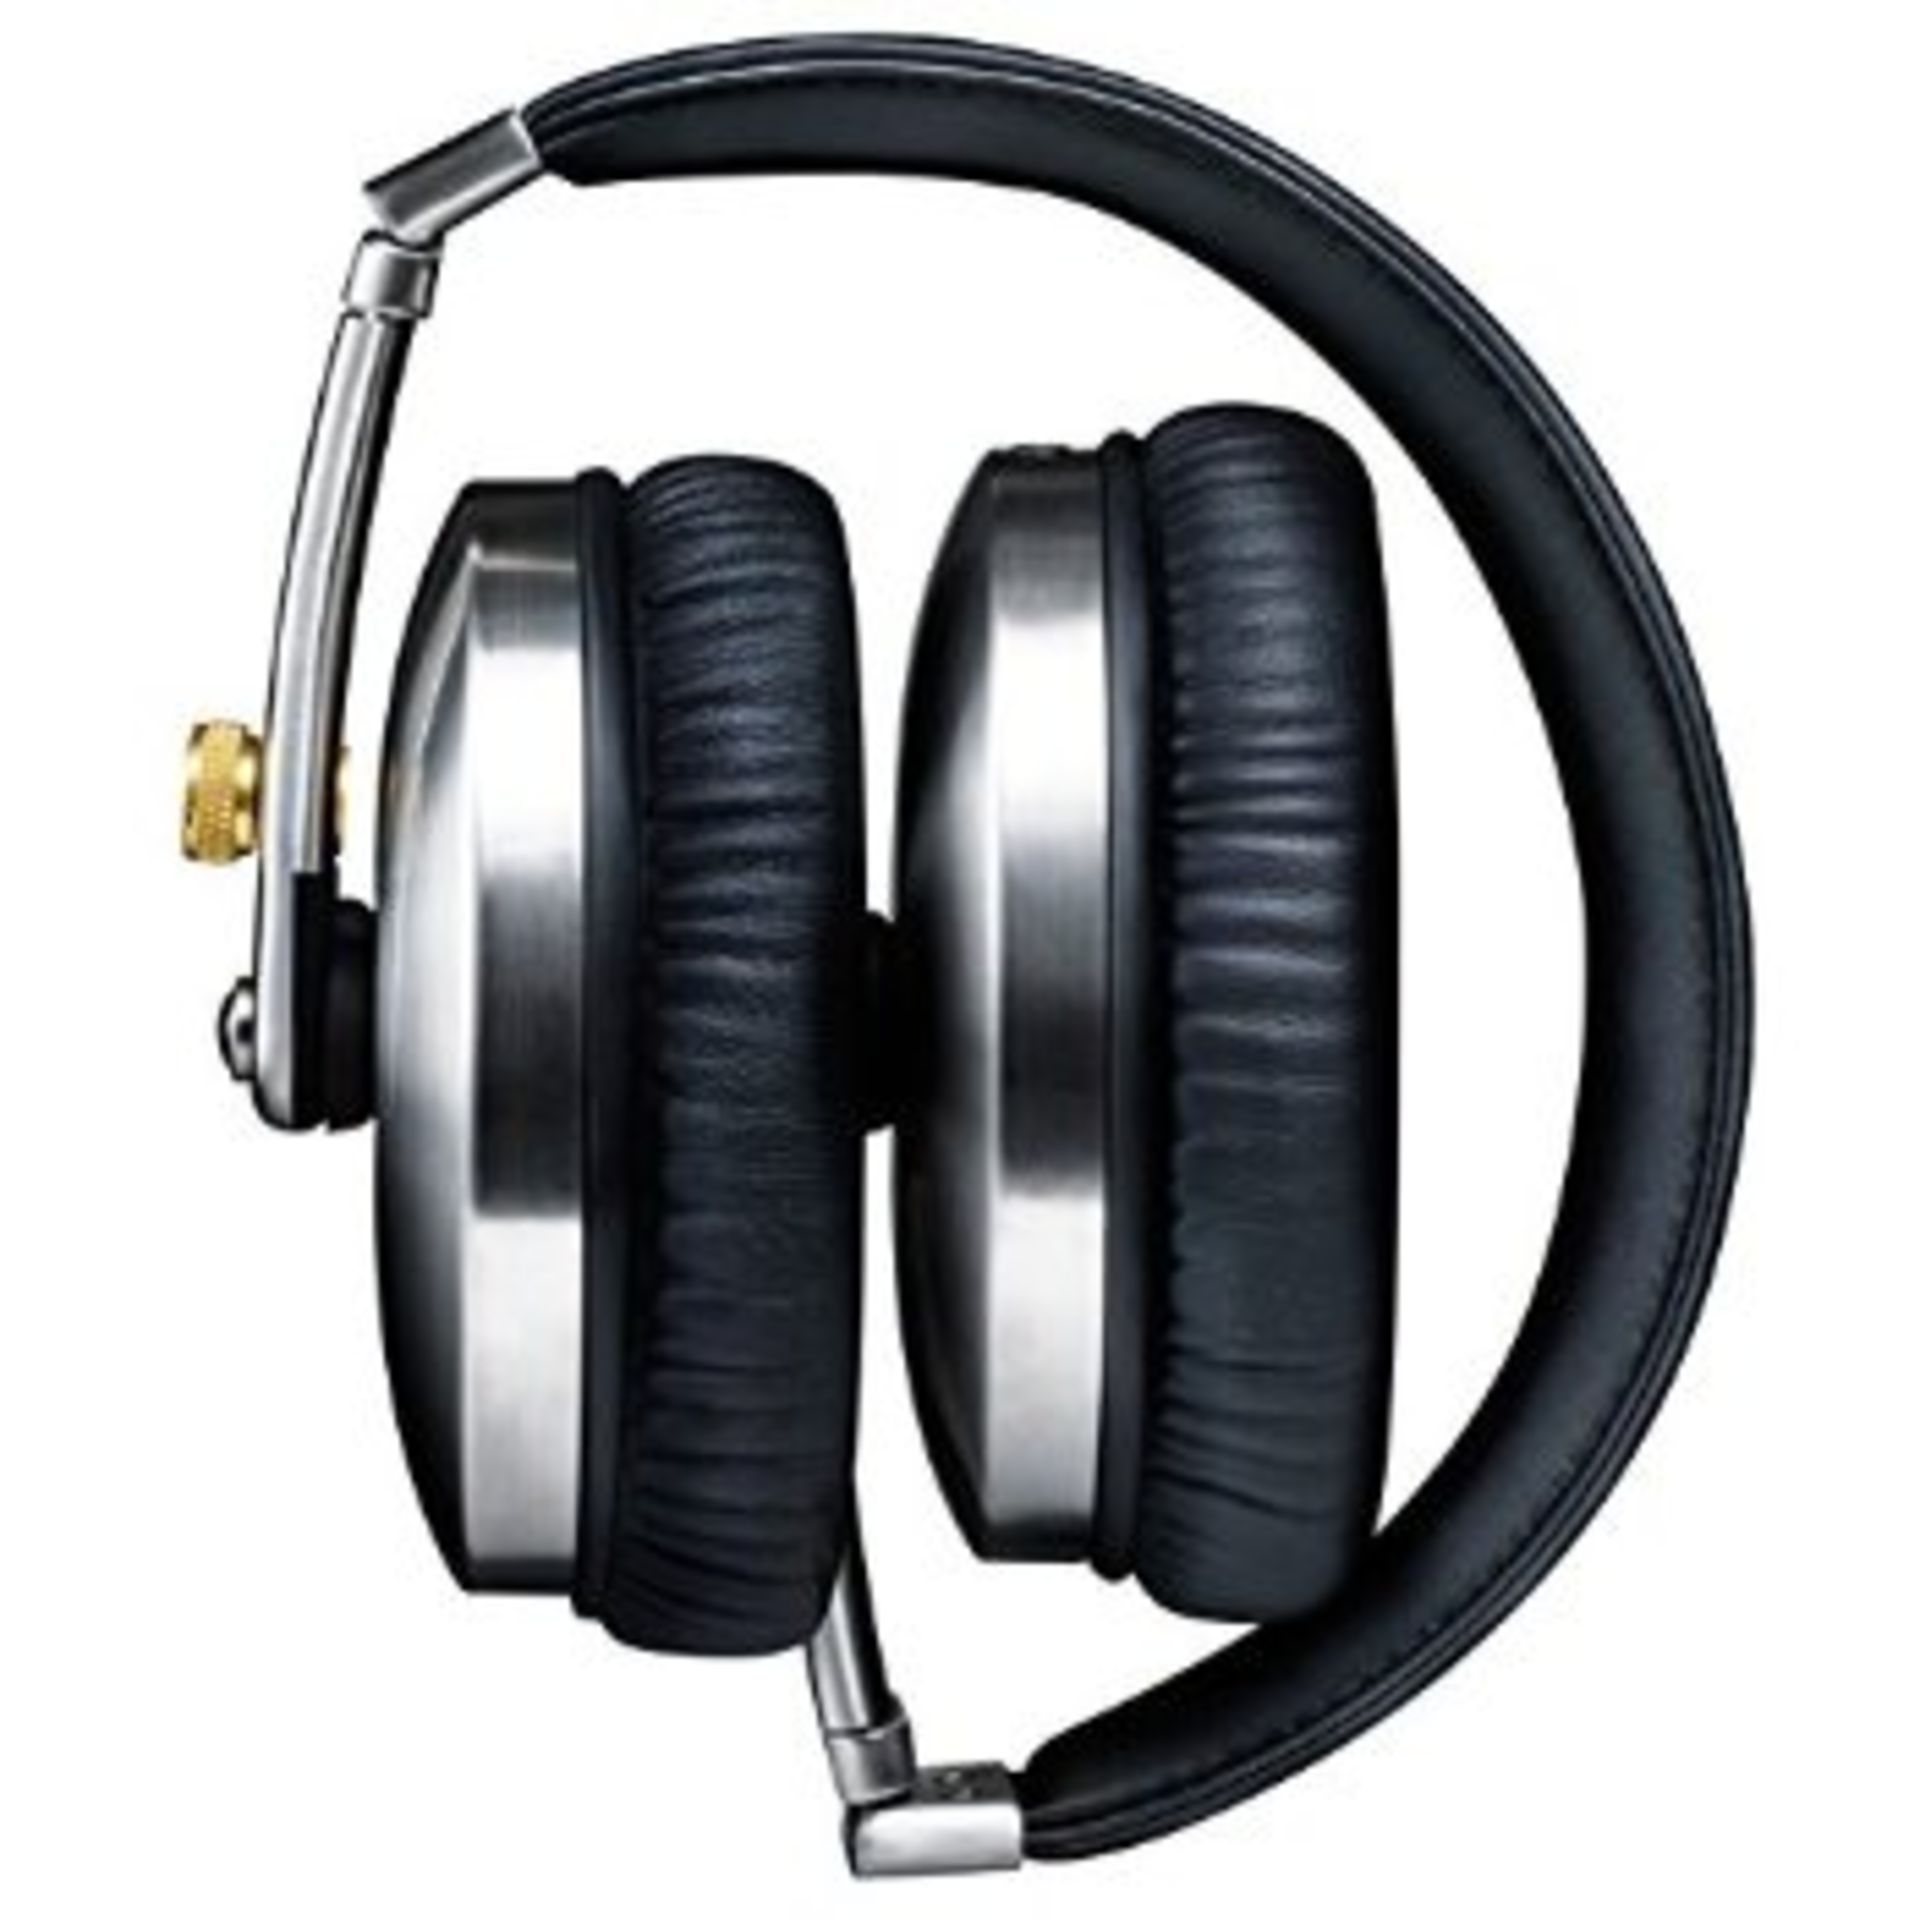 V Brand New Ted Baker Rockall High Performance Folding Over Ear Headphones Black/Silver Brushed - Image 2 of 2